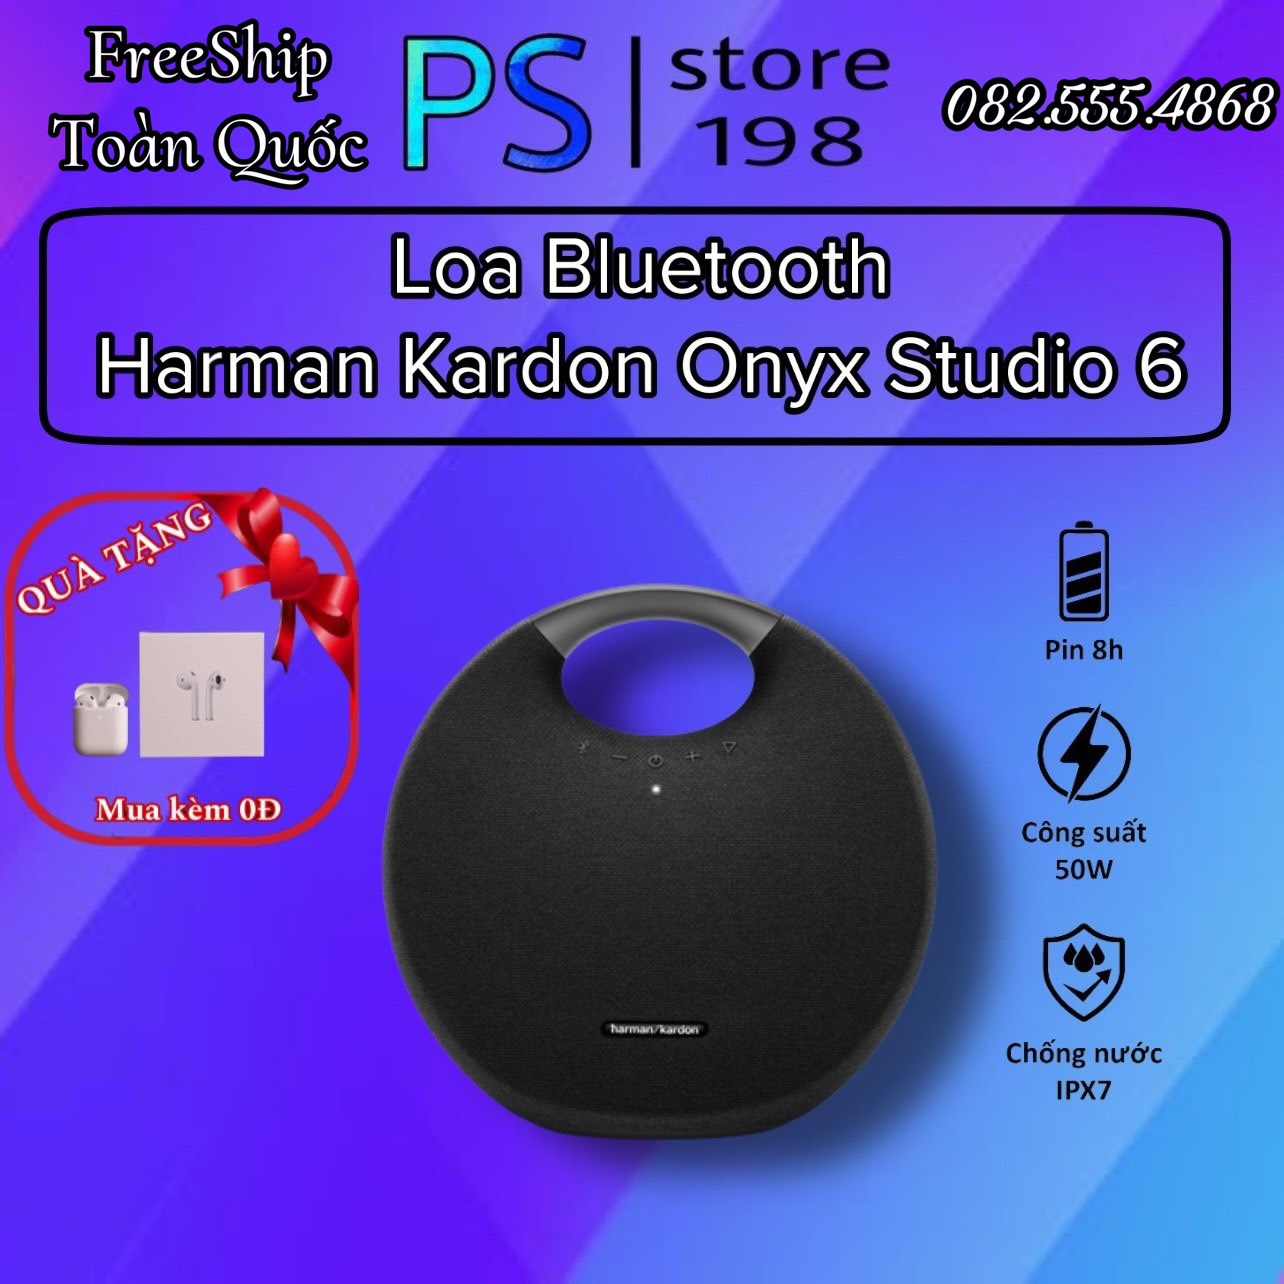 Loa Bluetooth Harman Kardon Onyx Studio 5 6 - Chính Hãng